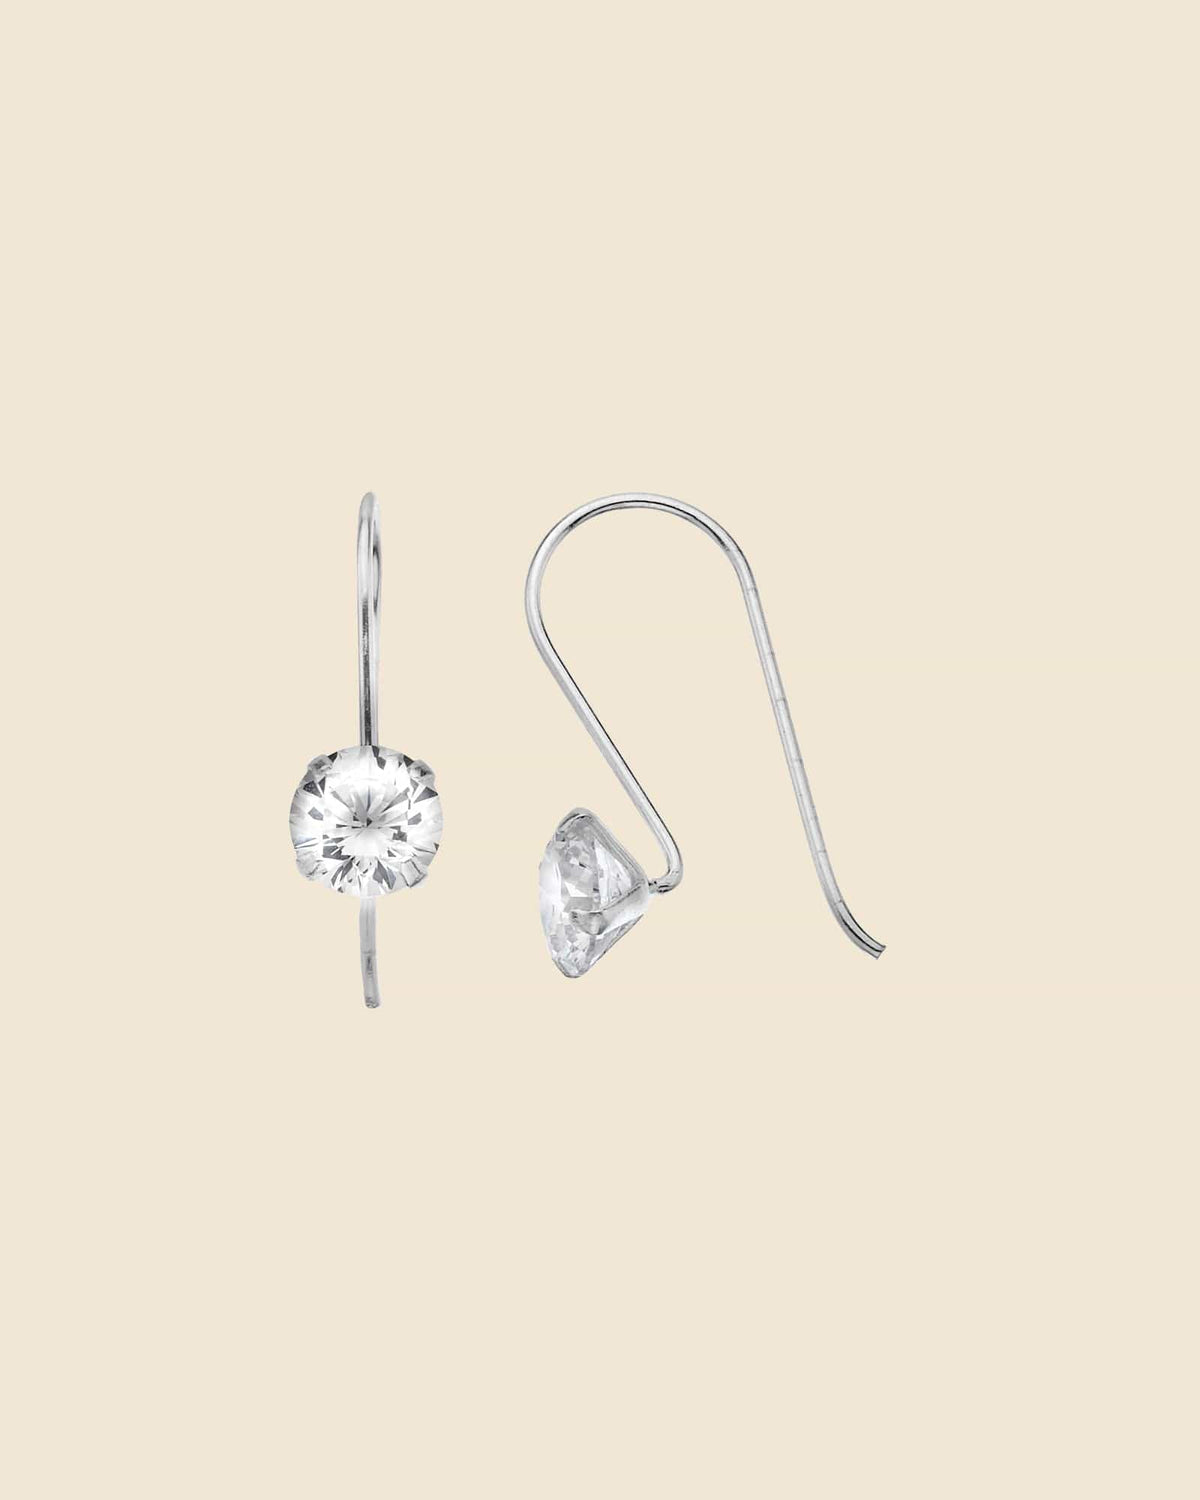 Sterling Silver Simple Solitaire Drop Earrings